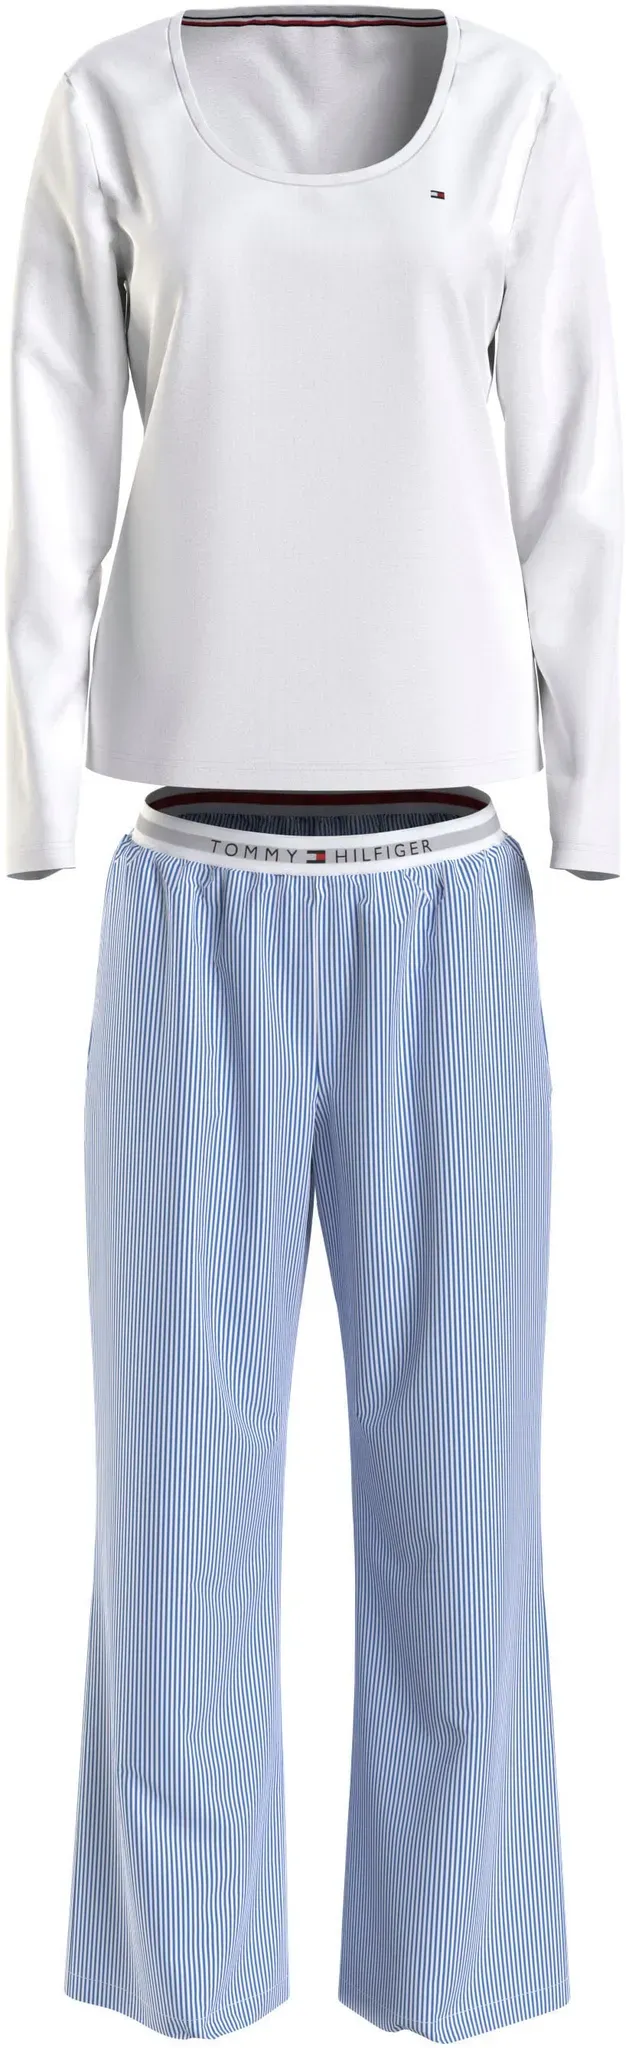 Pyjama TOMMY HILFIGER UNDERWEAR "TH LS PJ SET WOVEN" Gr. S (36), blau (white, ithaca stripe blue spell) Damen Homewear-Sets Pyjamas Shirt uni, Hose gestreift